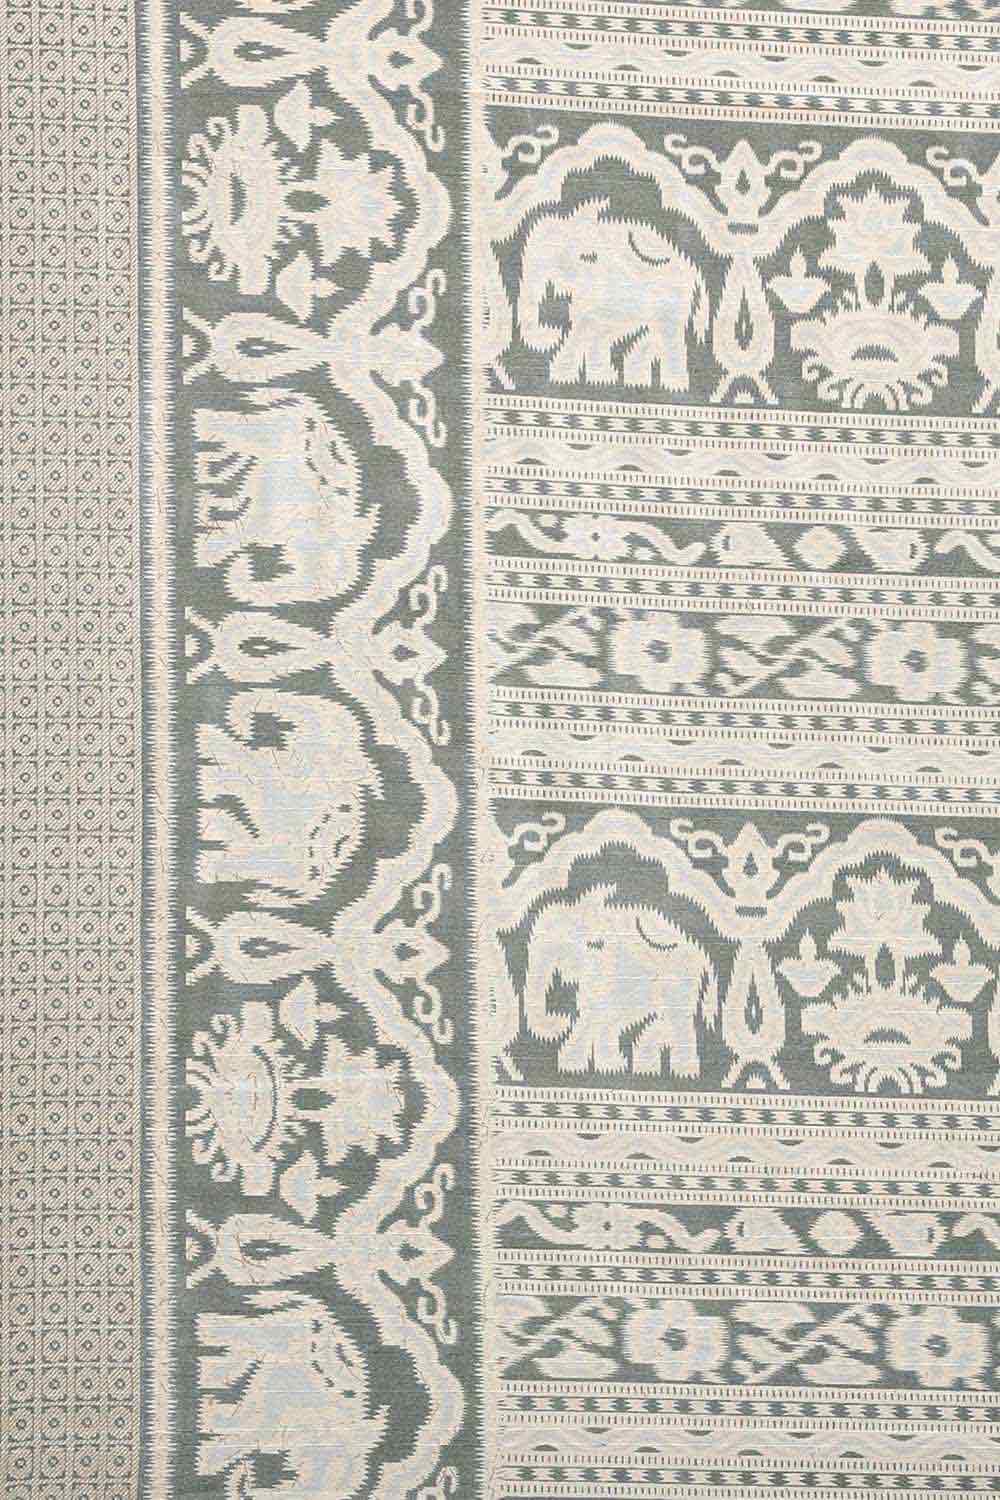 Grey Bhagalpuri Silk Printed Saree